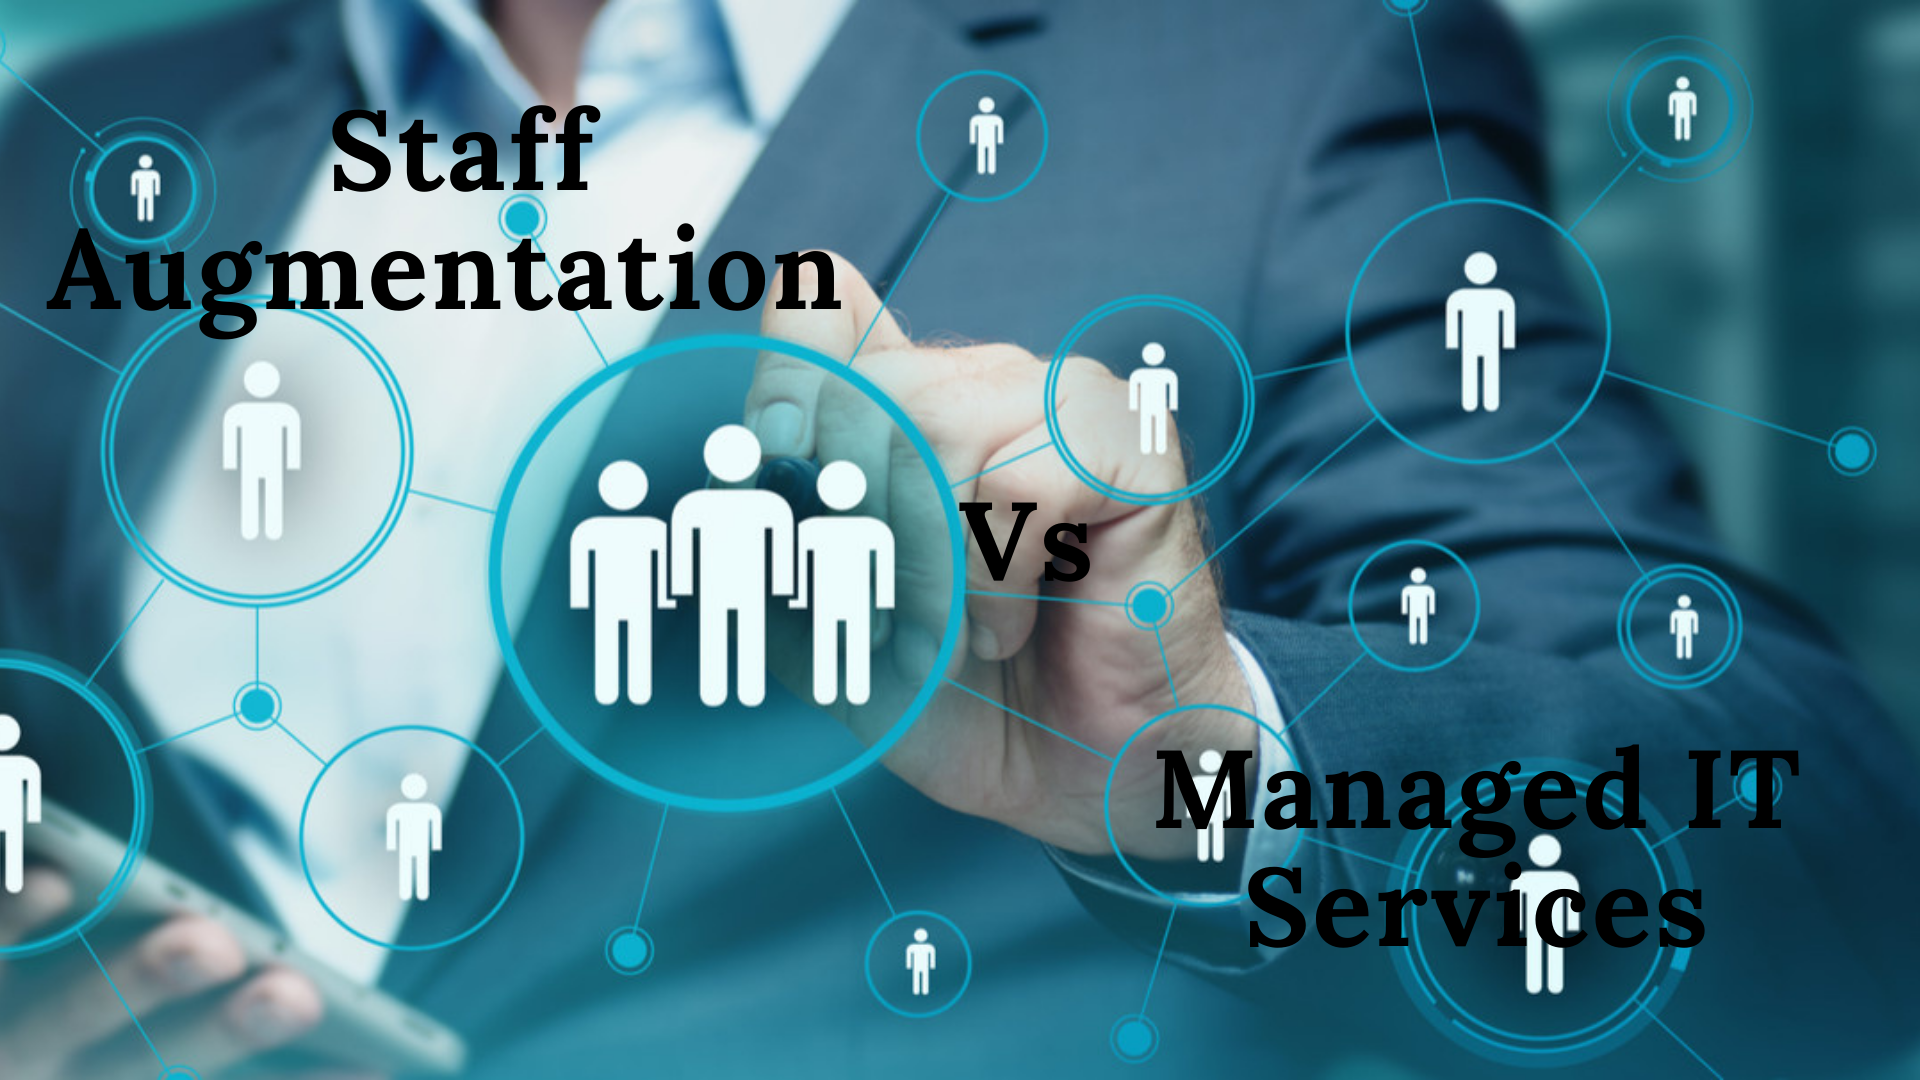 Staff Augmentation Vs Managed IT Services